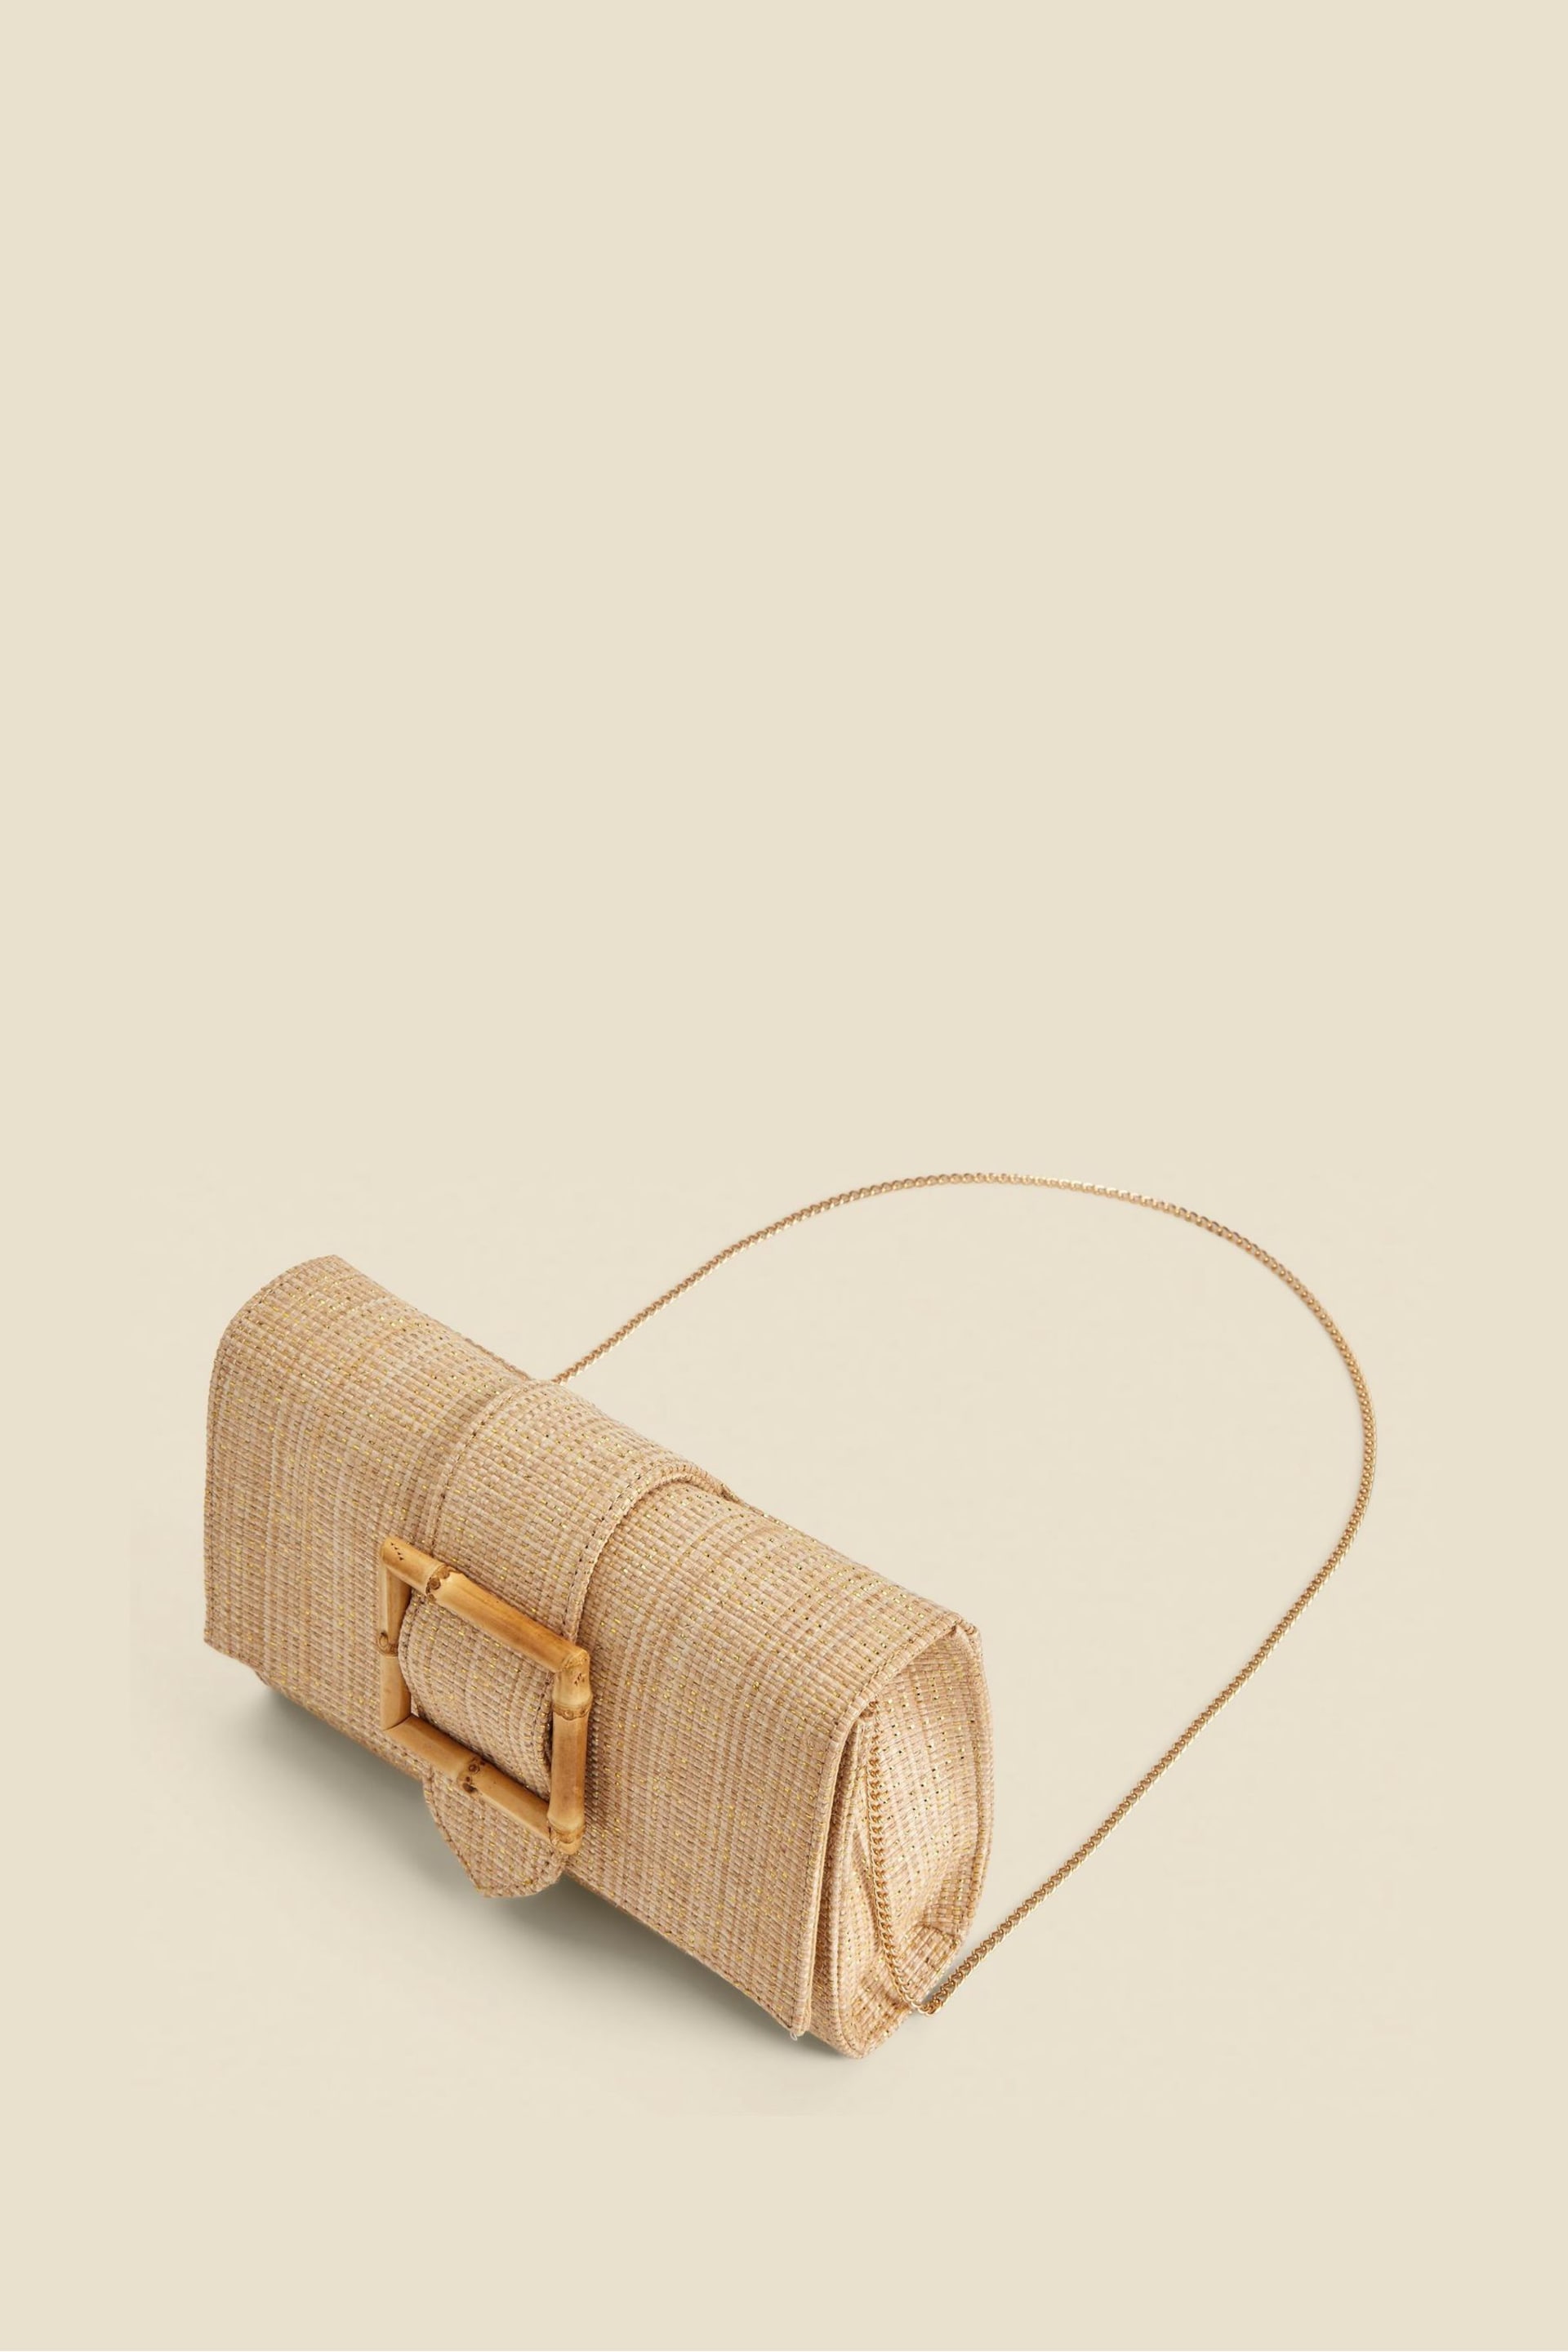 Sosandar Natural Raffia Bamboo Clasp Detail Clutch Bag - Image 2 of 3